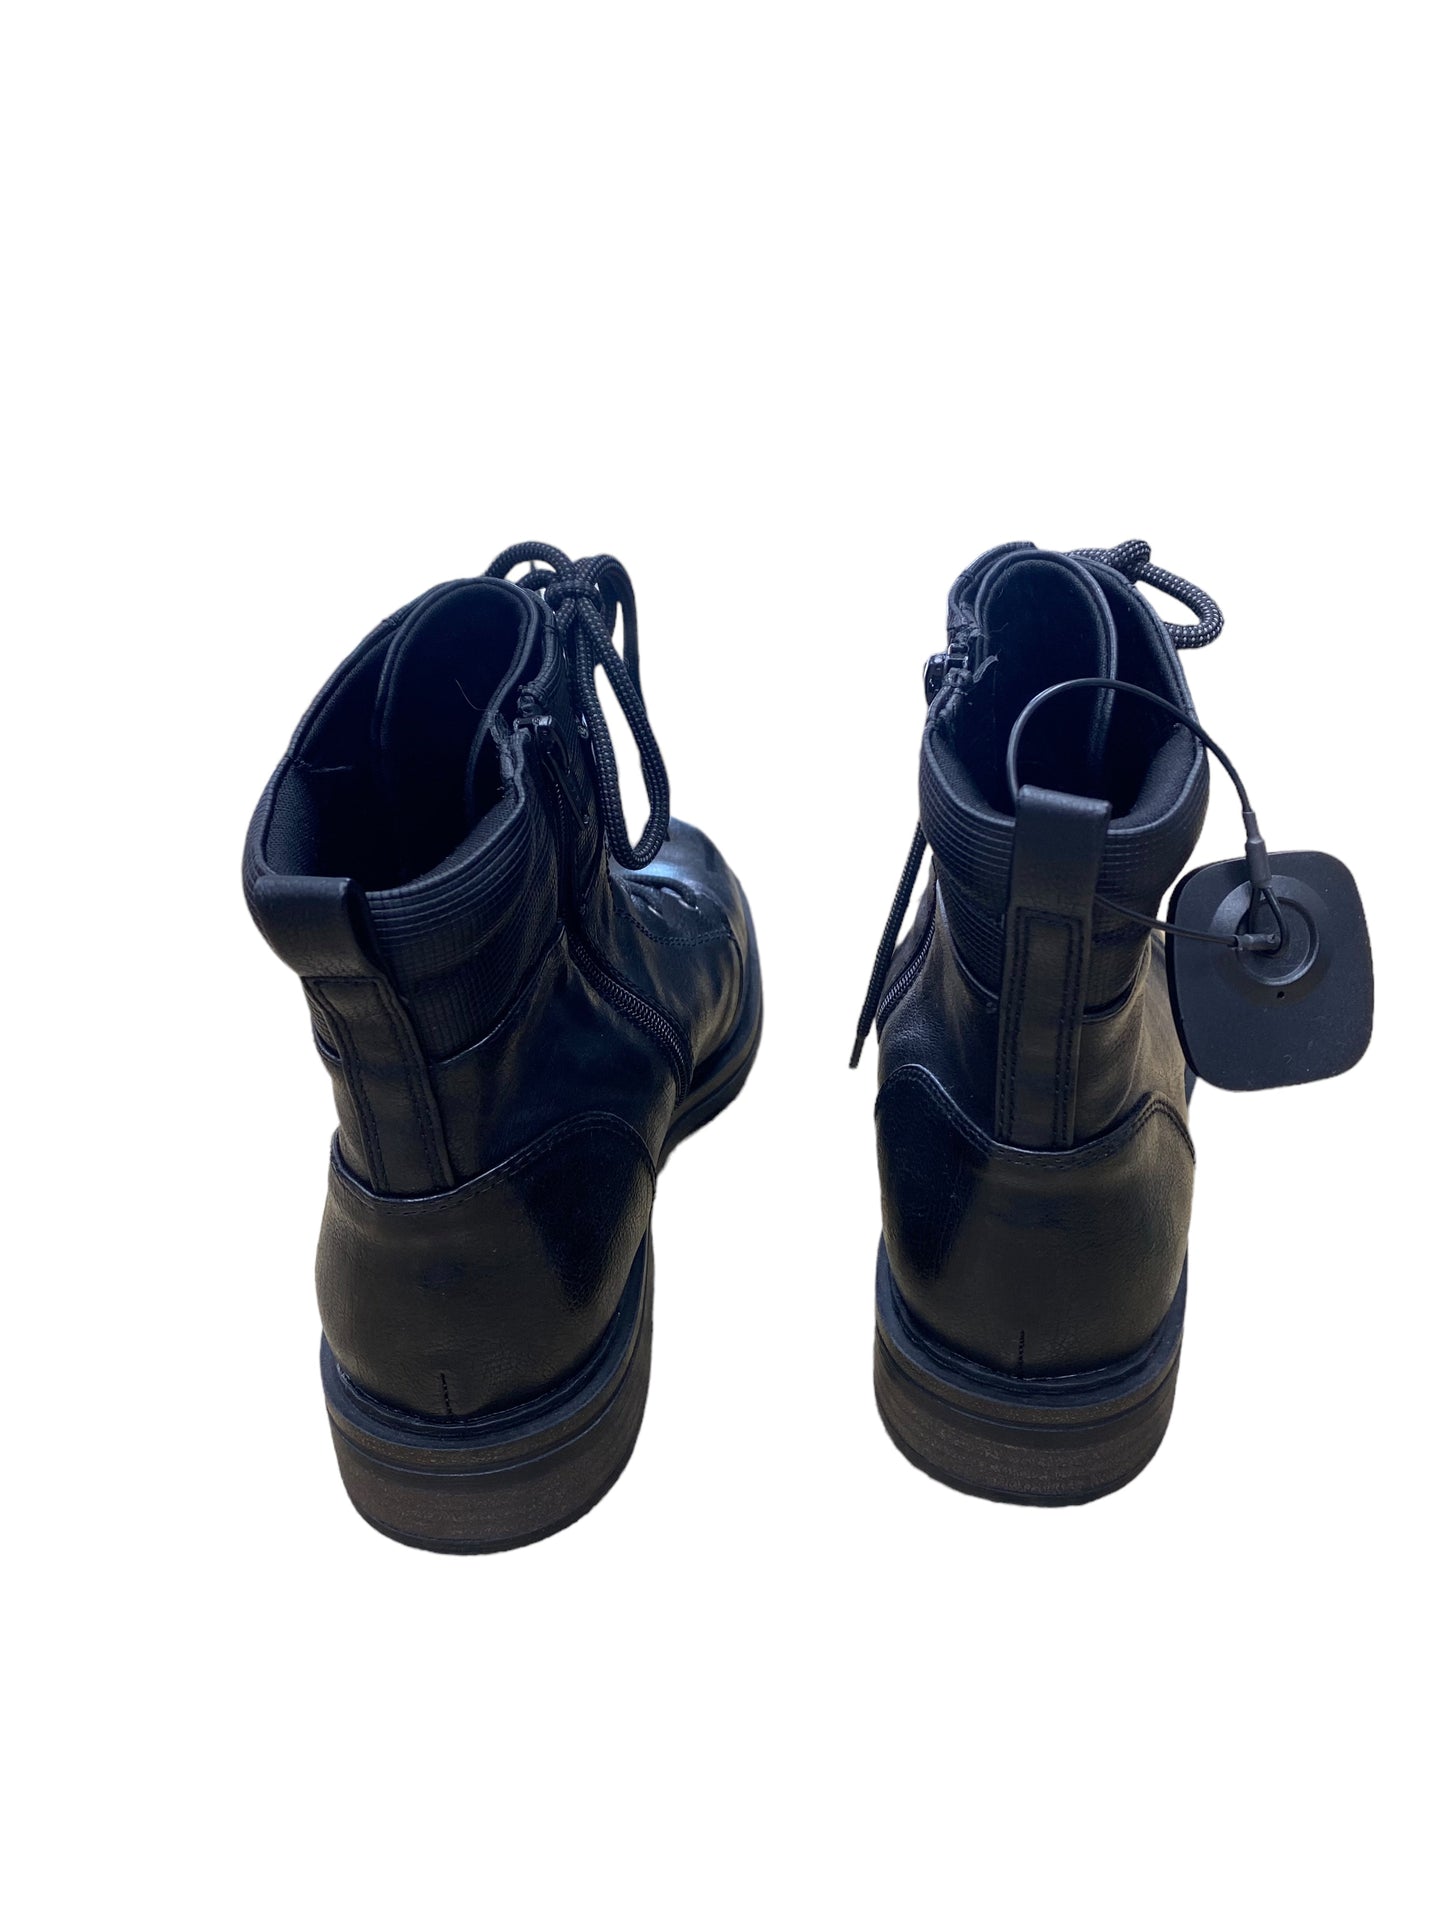 Black Boots Ankle Flats Bare Traps, Size 11